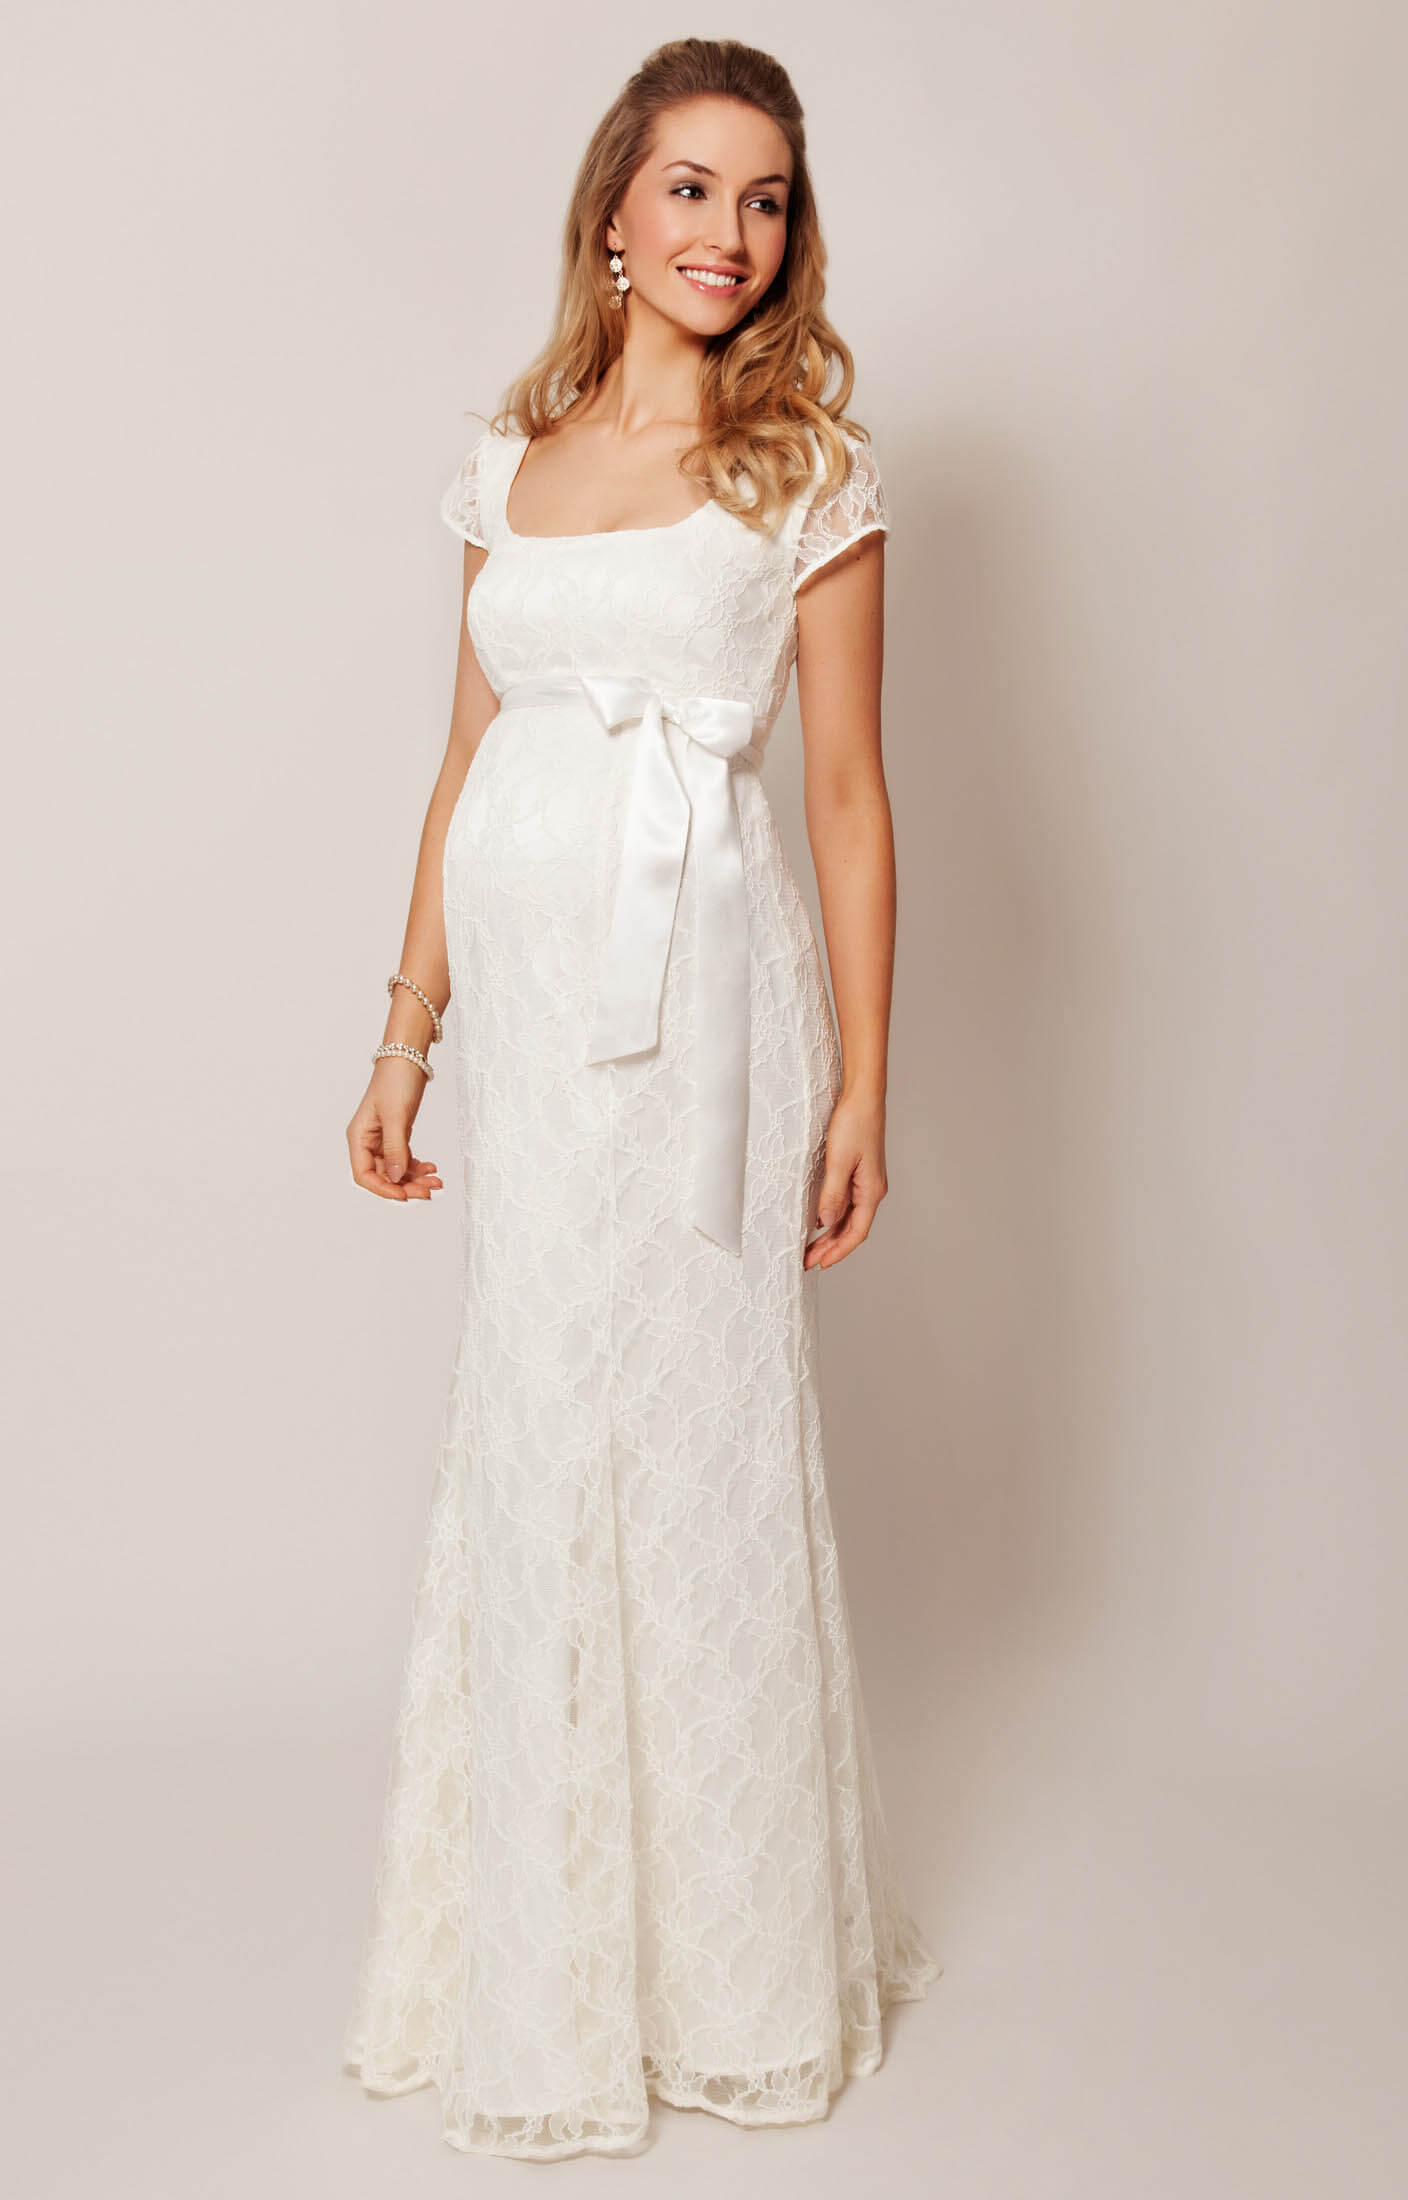 Jane Lace Dress Black - Maternity Wedding Dresses, Evening Wear